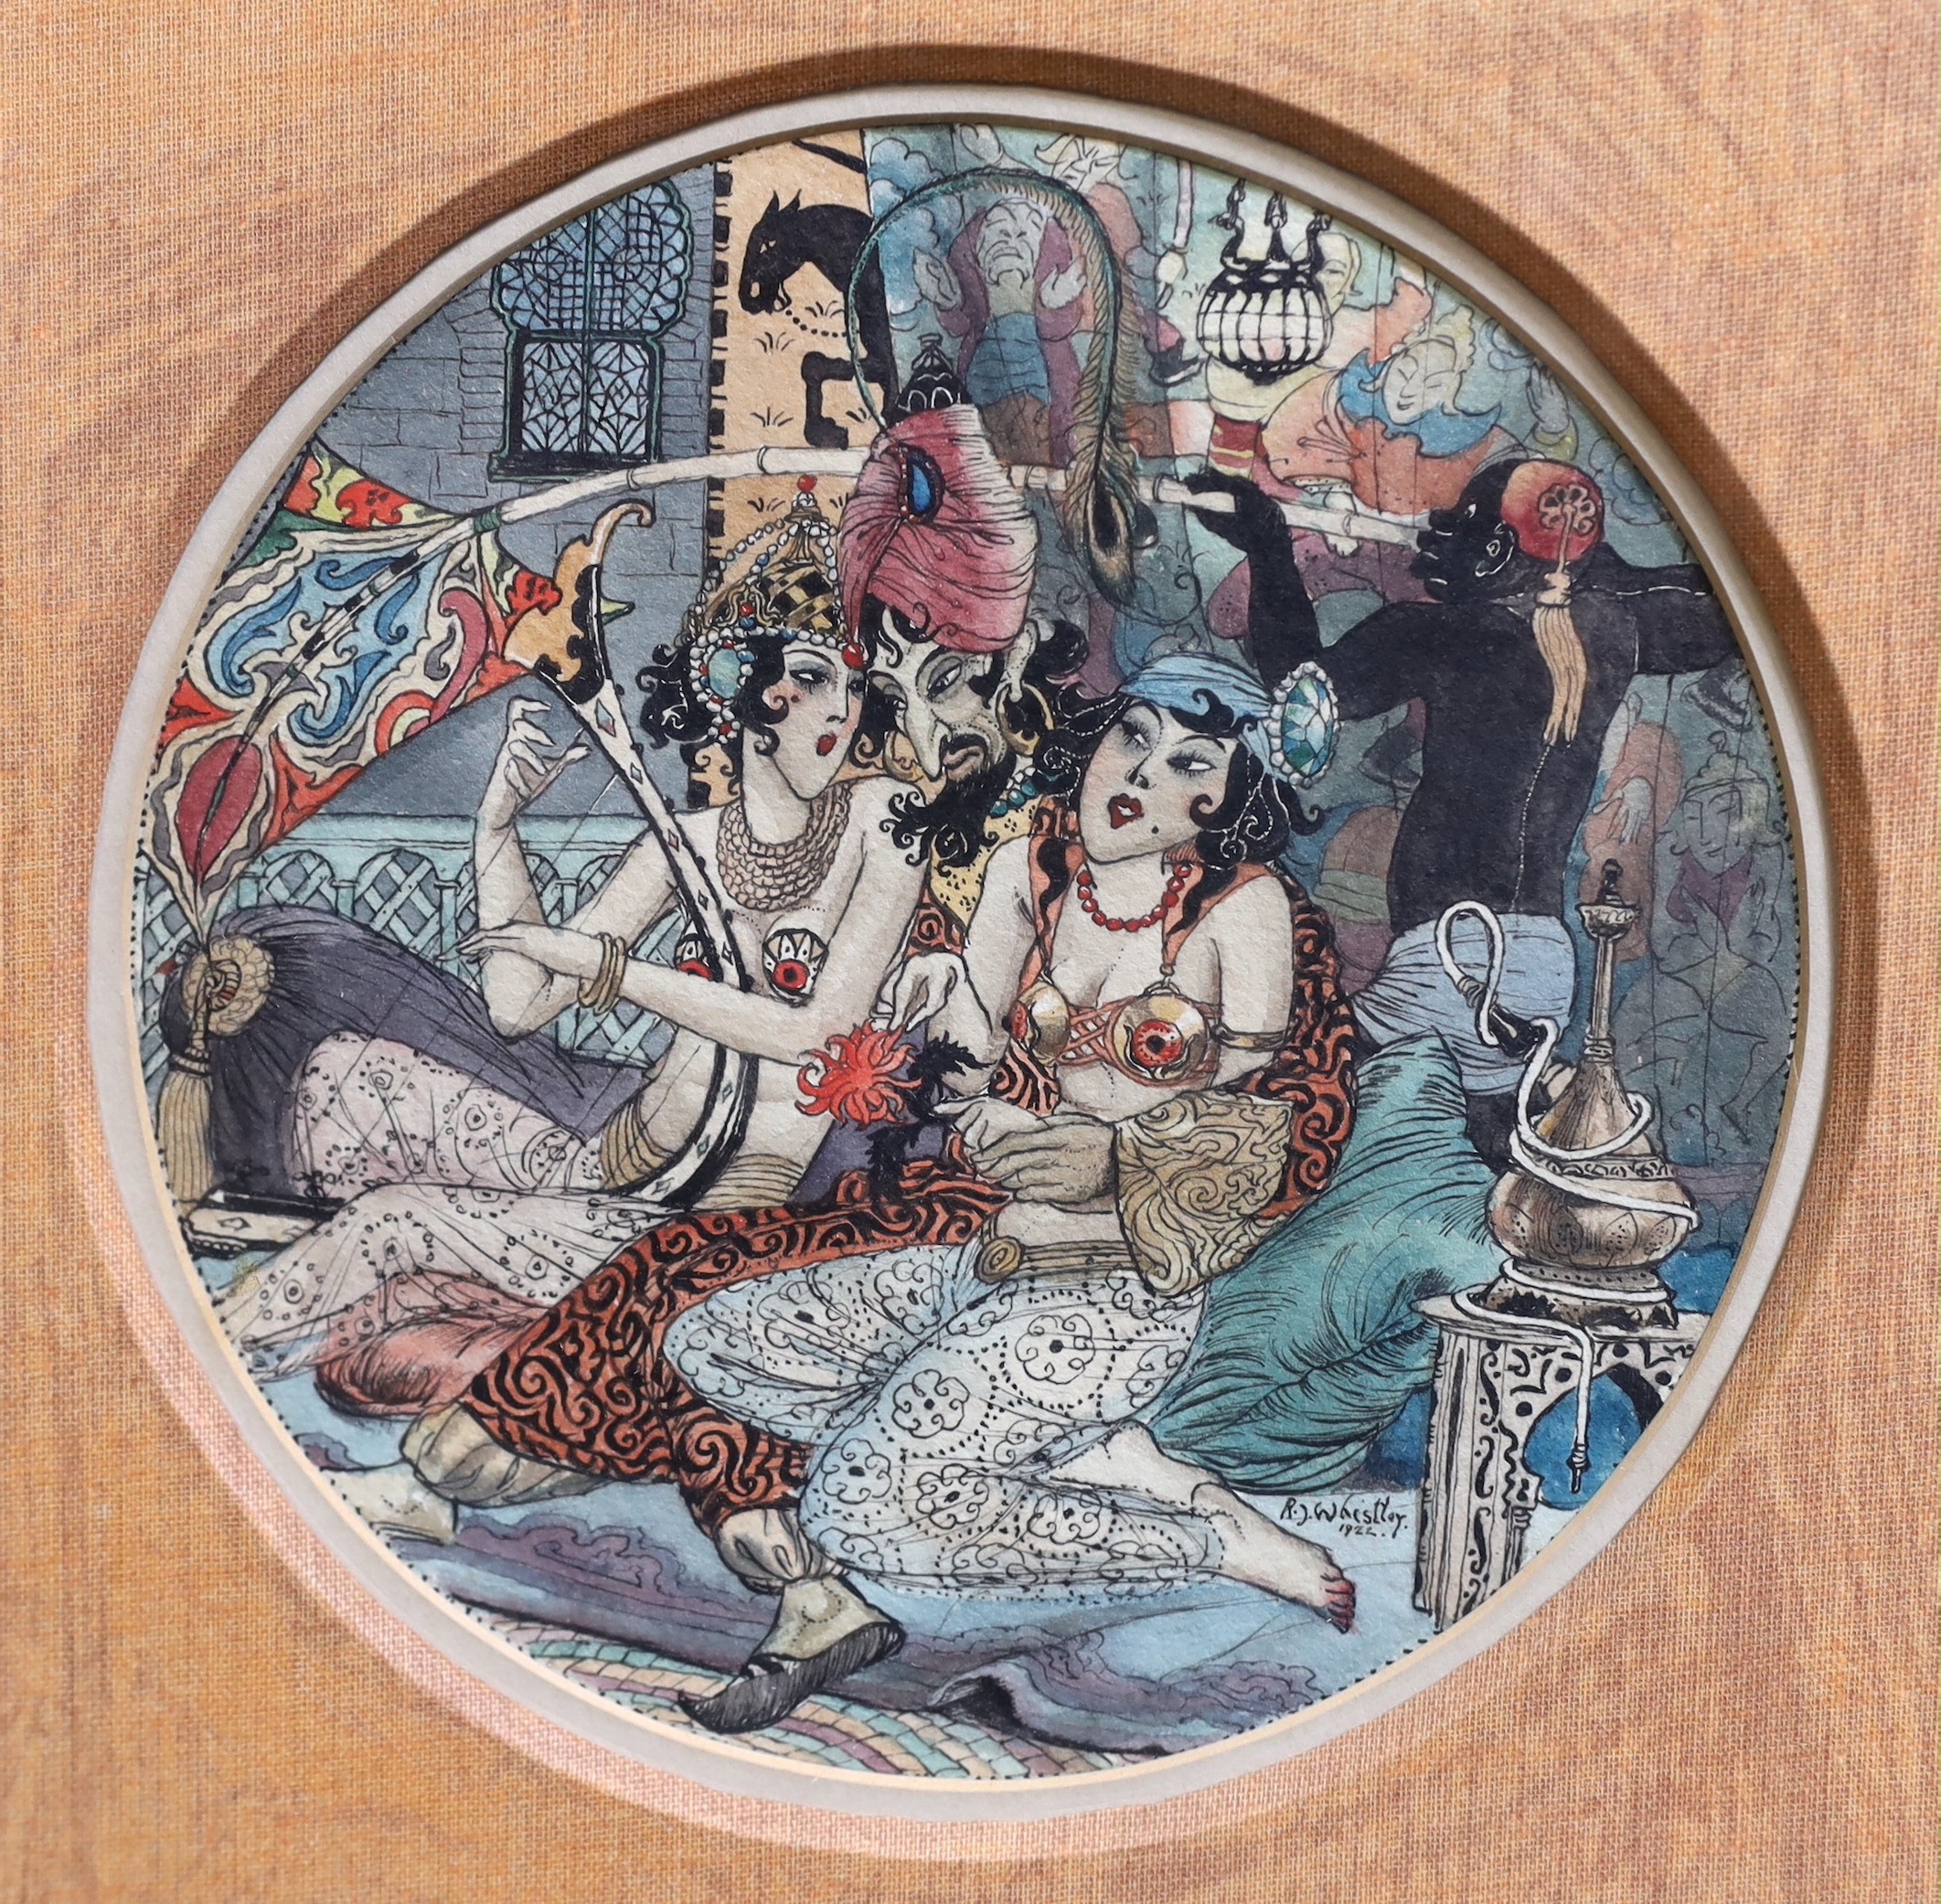 Rex Whistler (1905-1944), 'Arabian Nights', ink and watercolour, tondo, 15cm